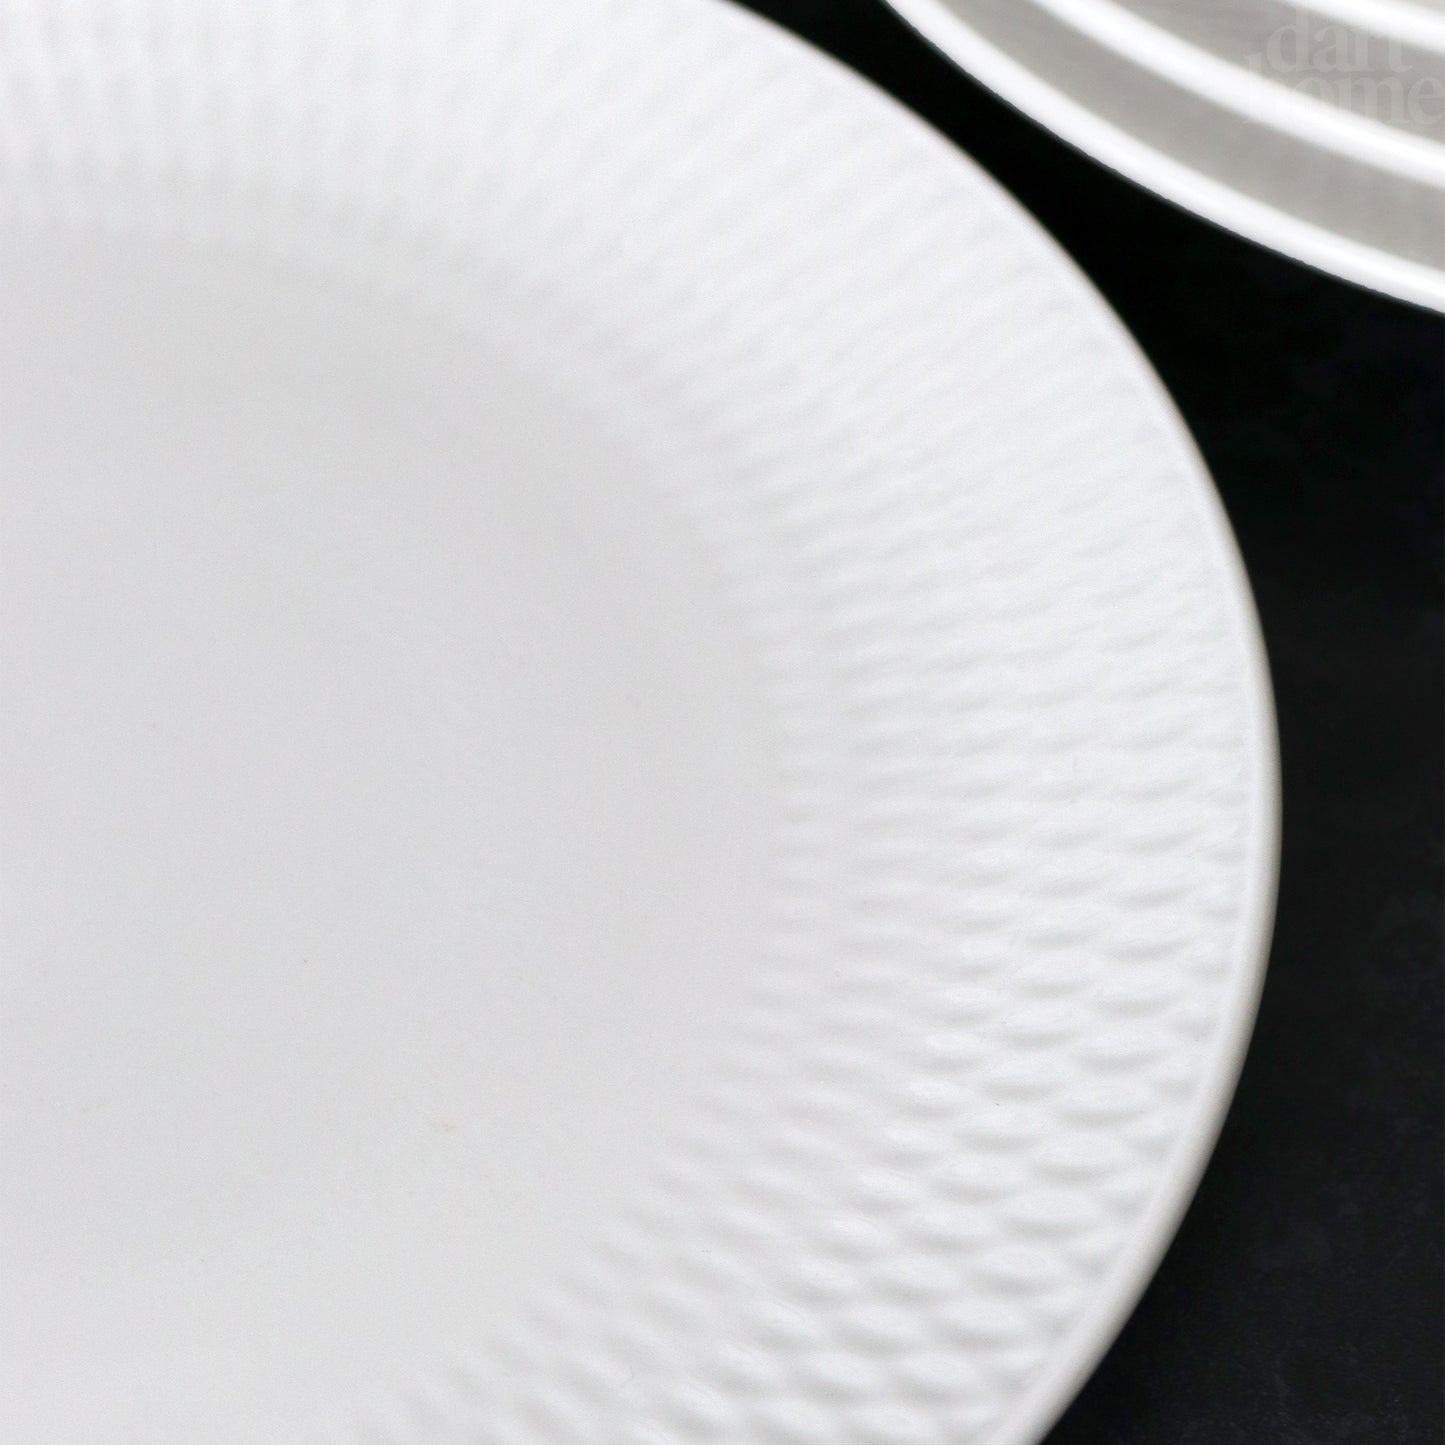 Set Of 4 White Jewel Dinner Plates